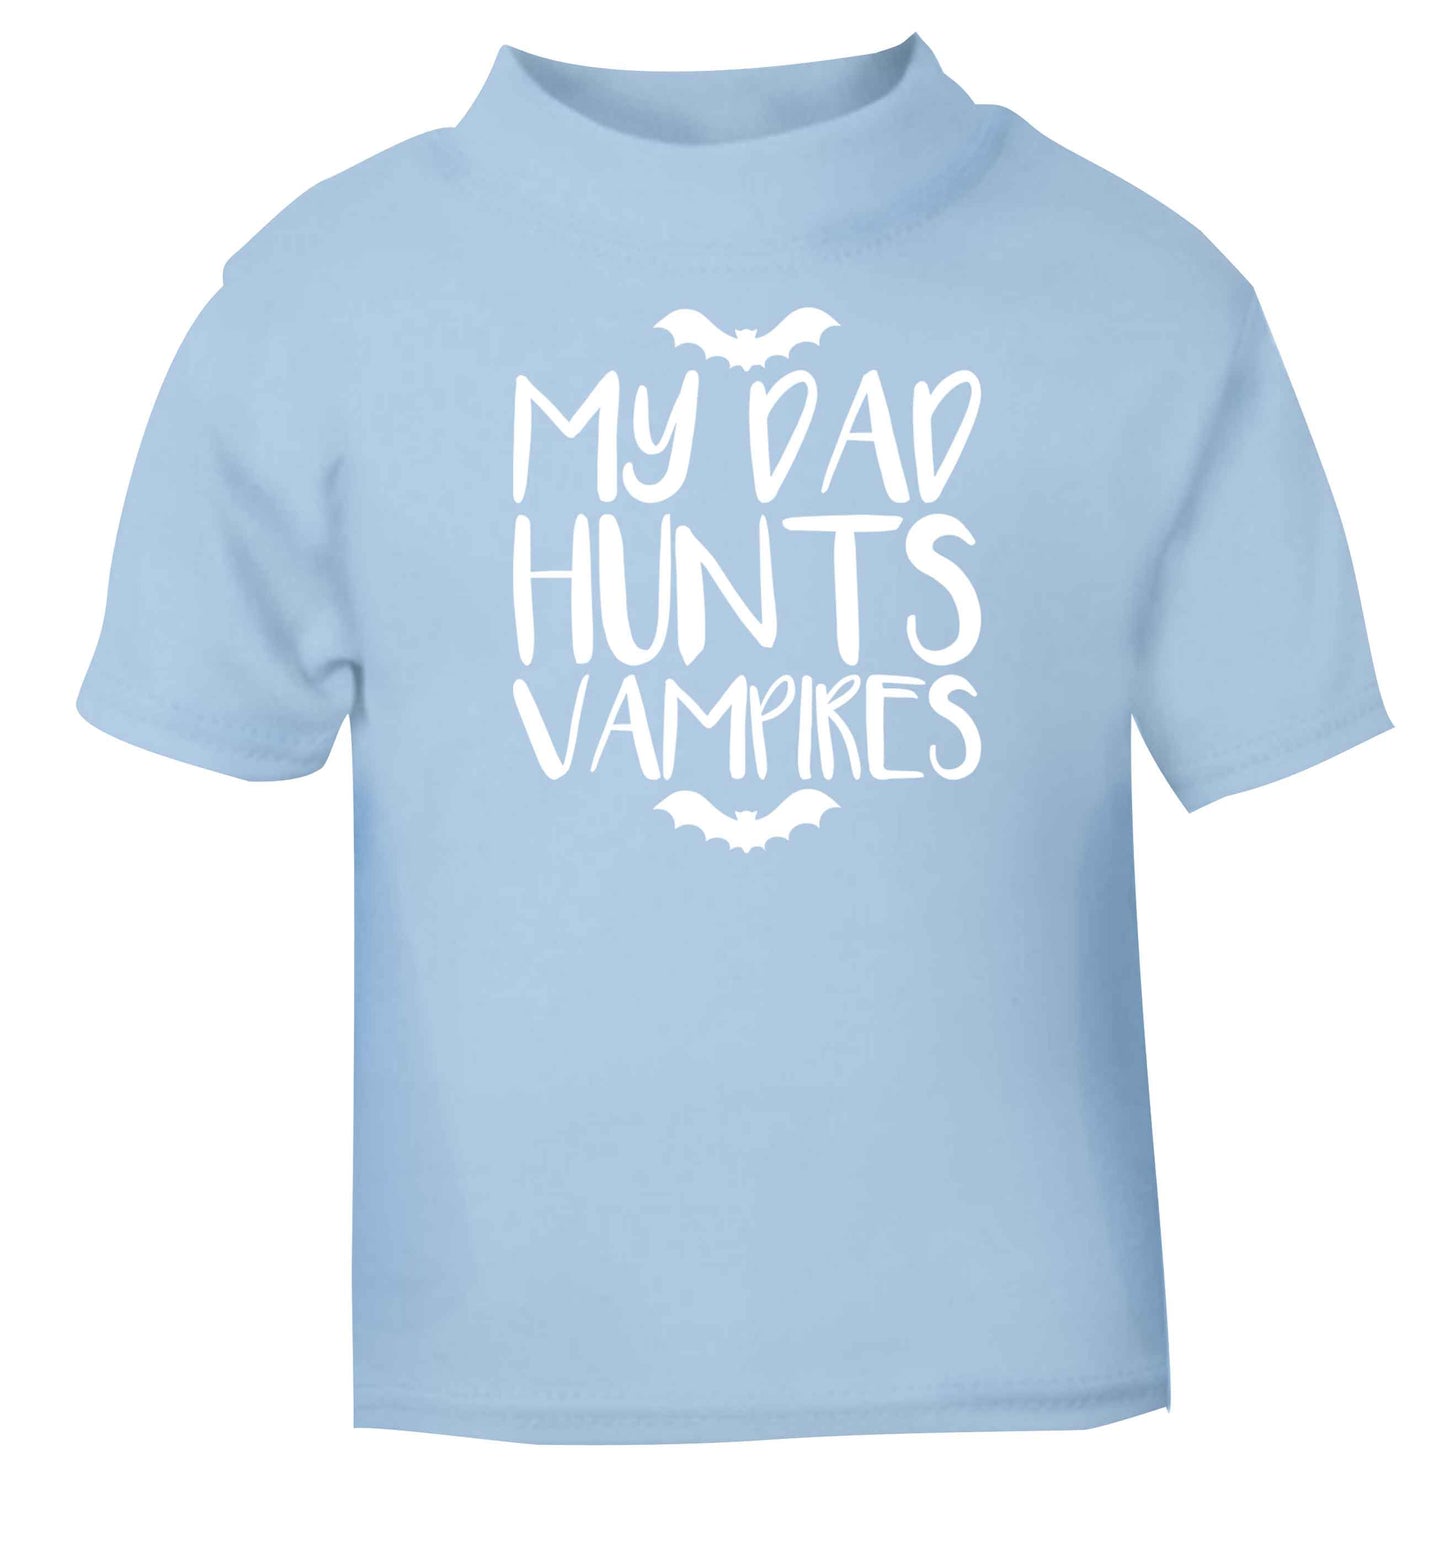 My dad hunts vampires light blue baby toddler Tshirt 2 Years